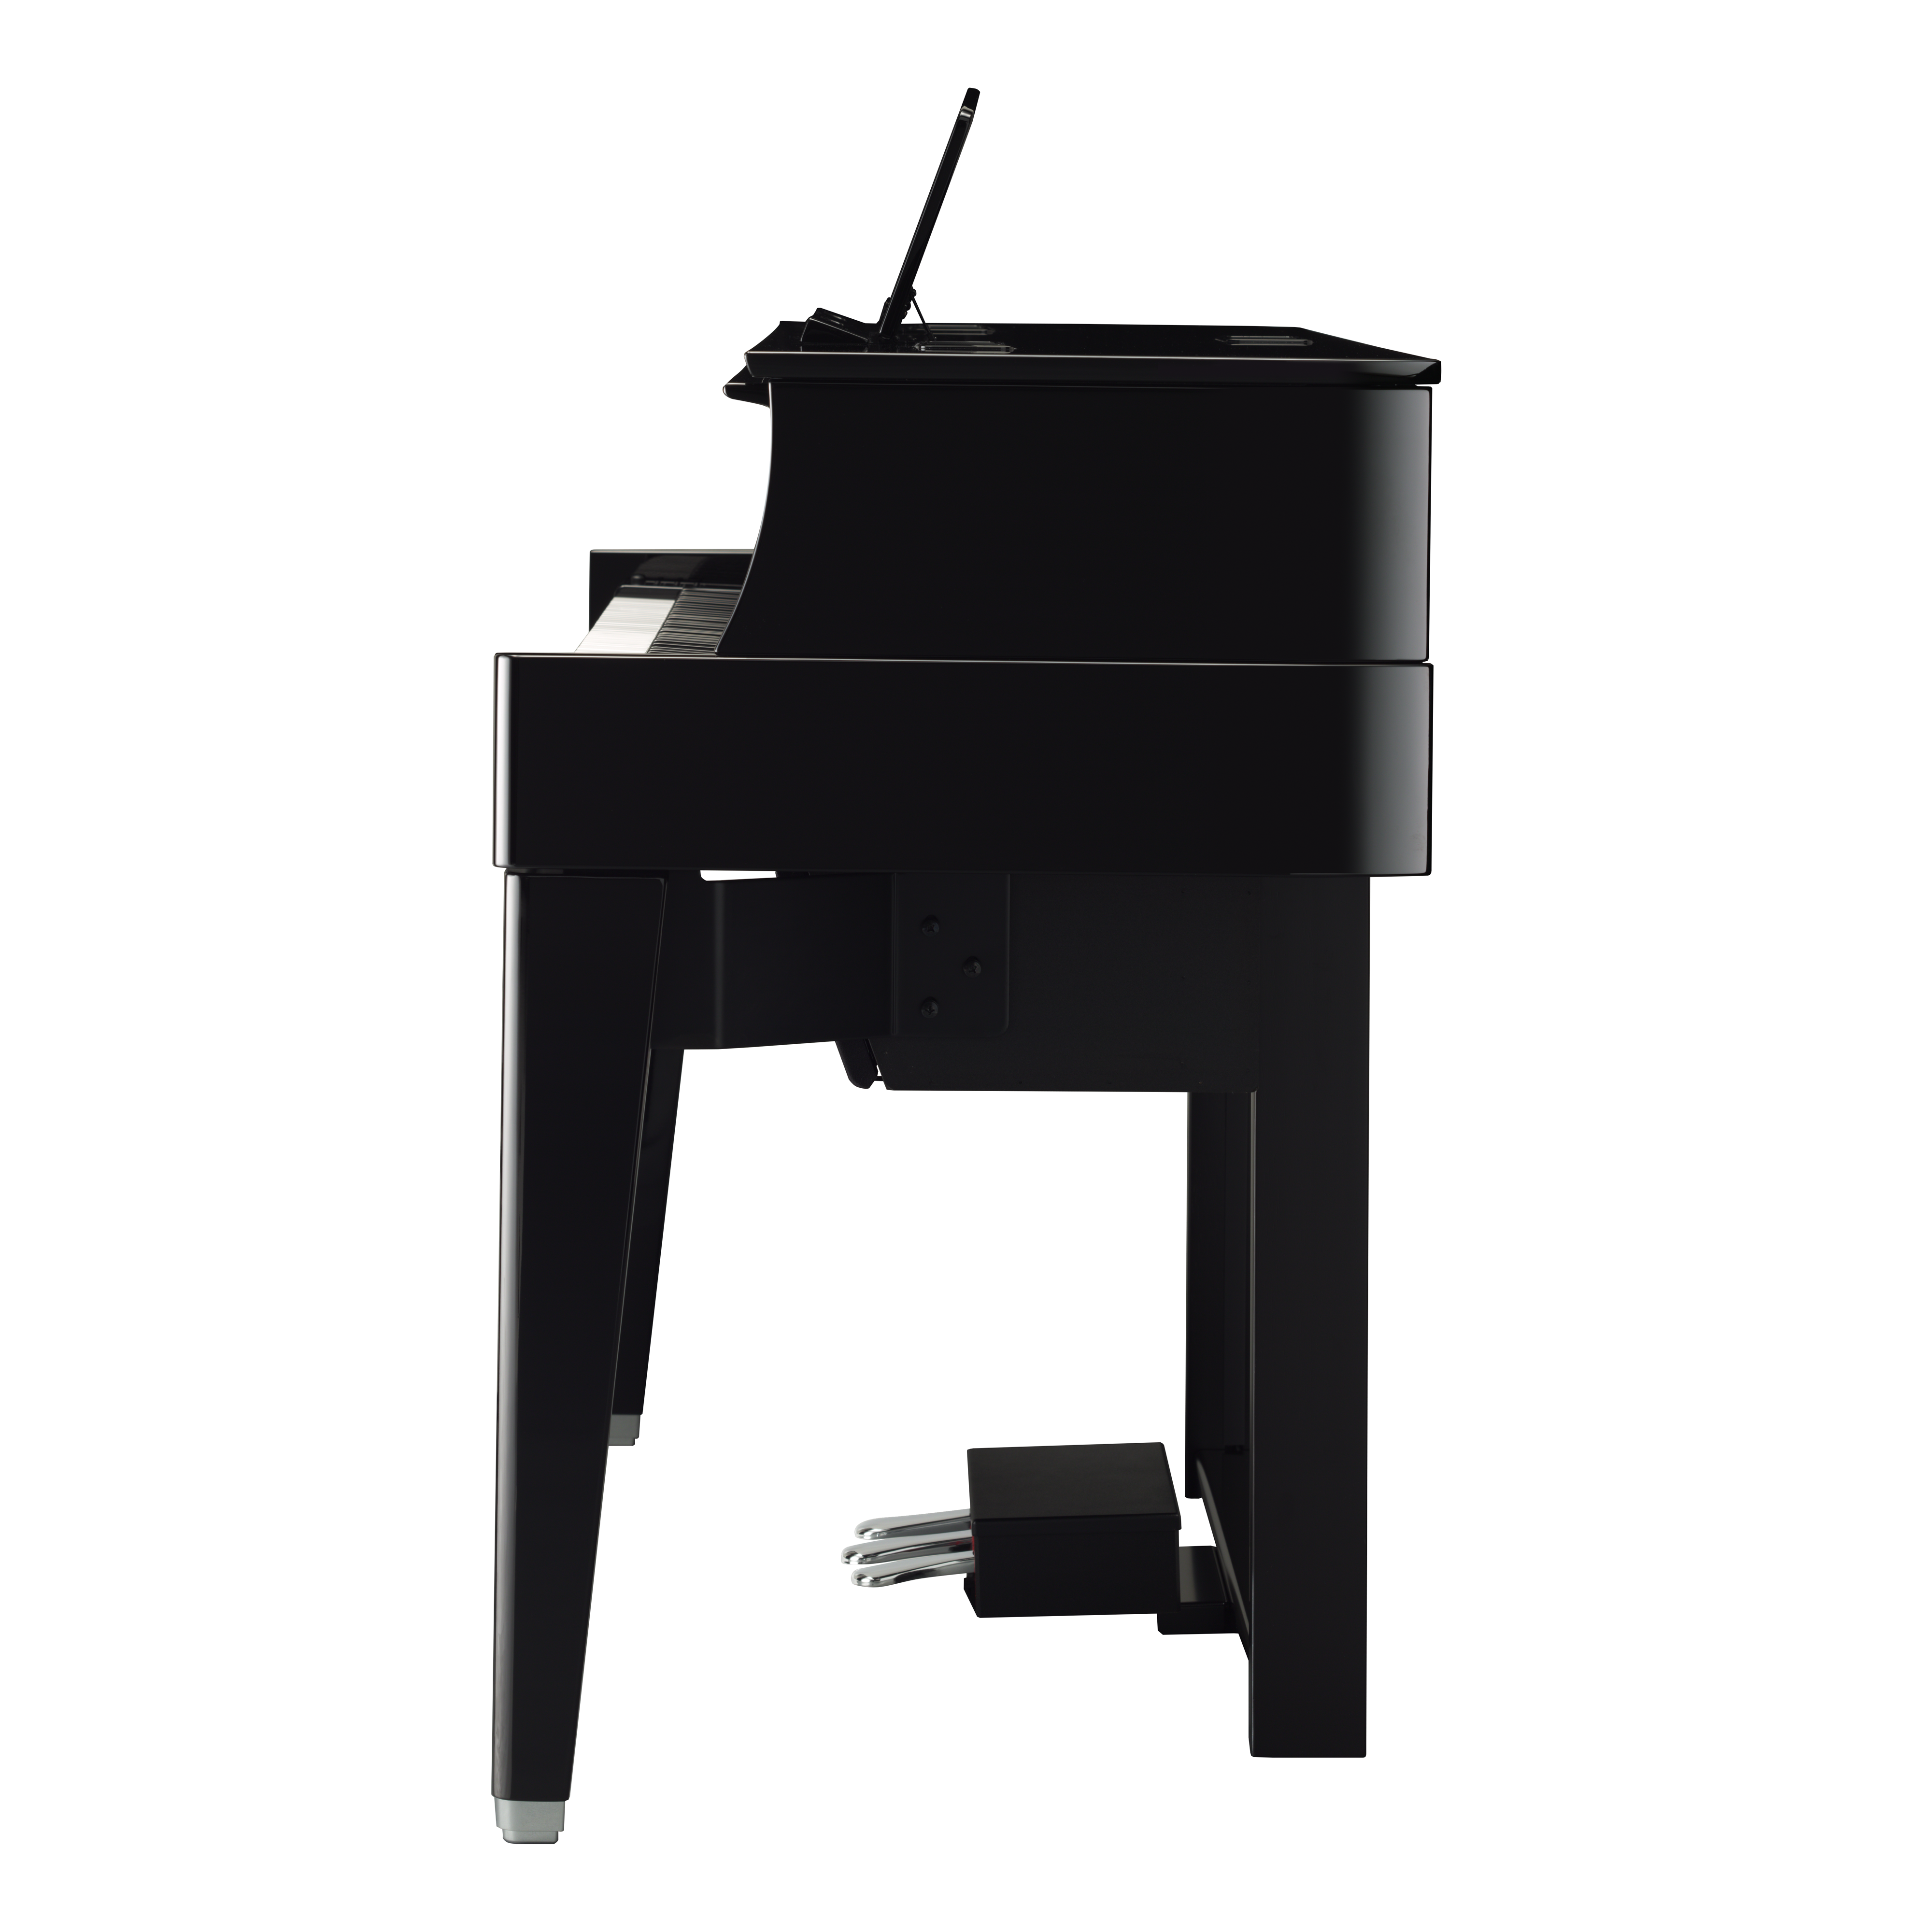 Espinoso Falange Espantar N1X - Overview - AvantGrand - Pianos - Musical Instruments - Products -  Yamaha - United States